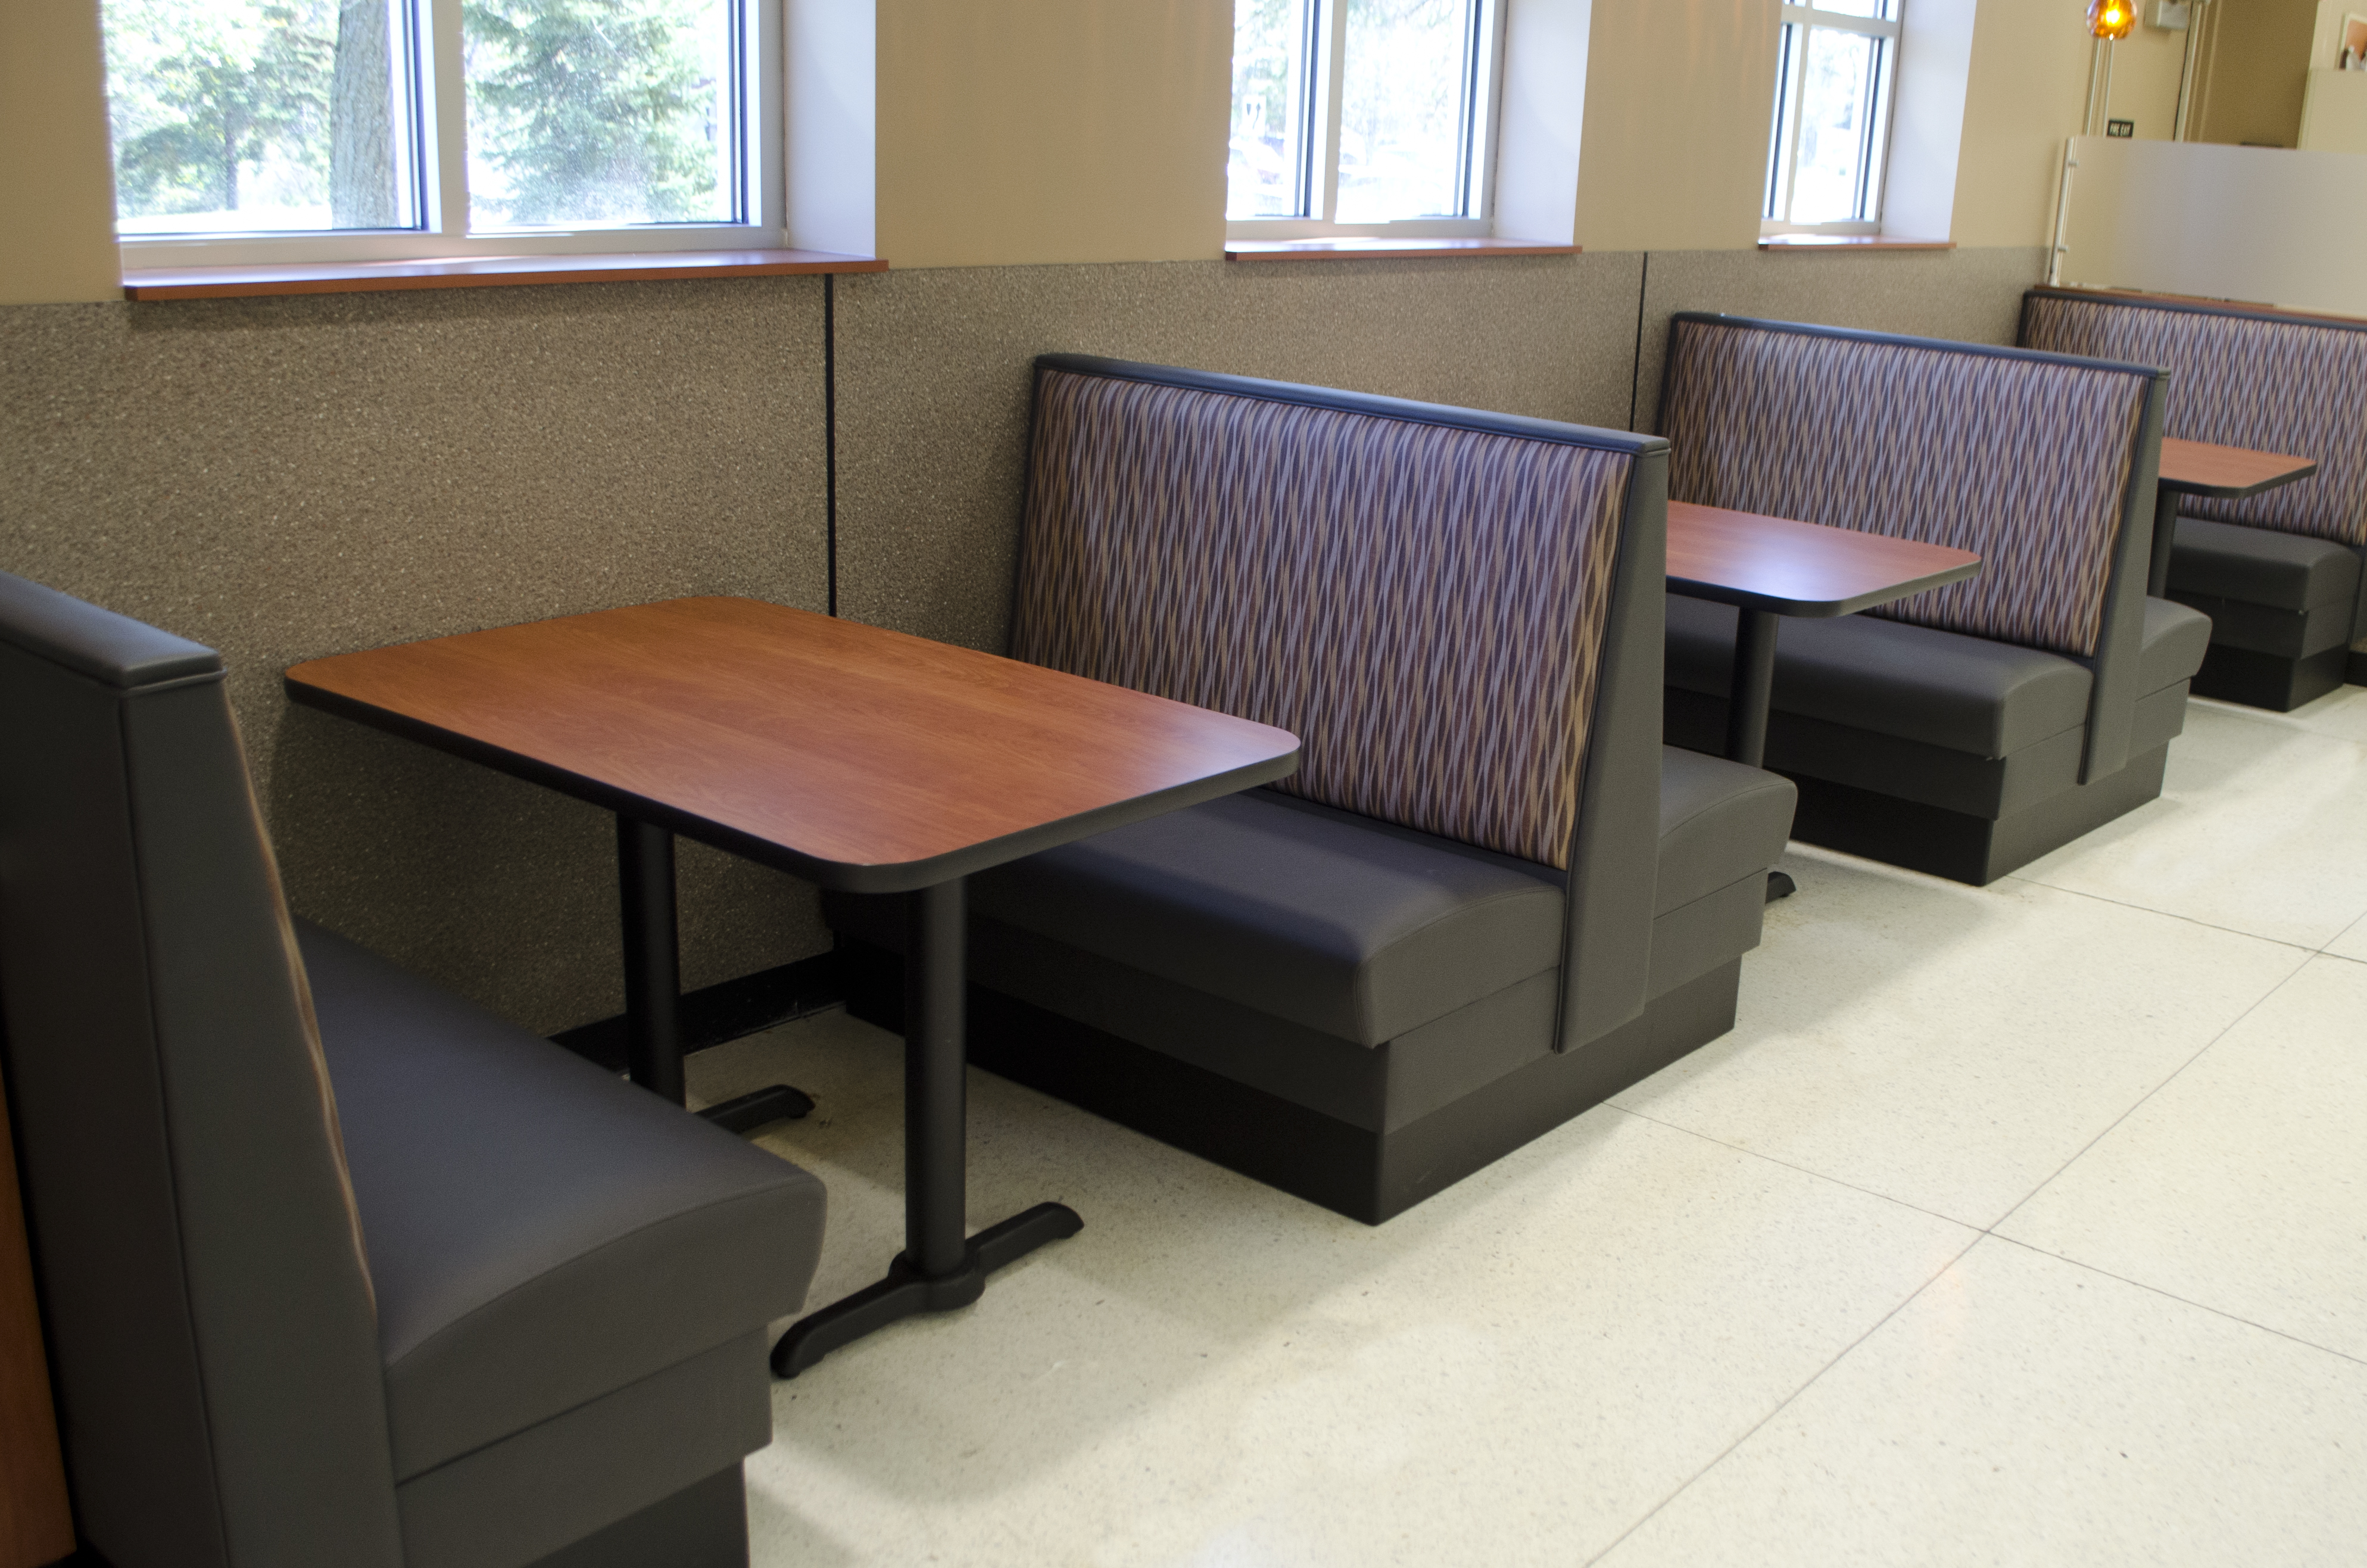 Upholstered Restaurant Booths | Commercial Restaurant Booths - Official